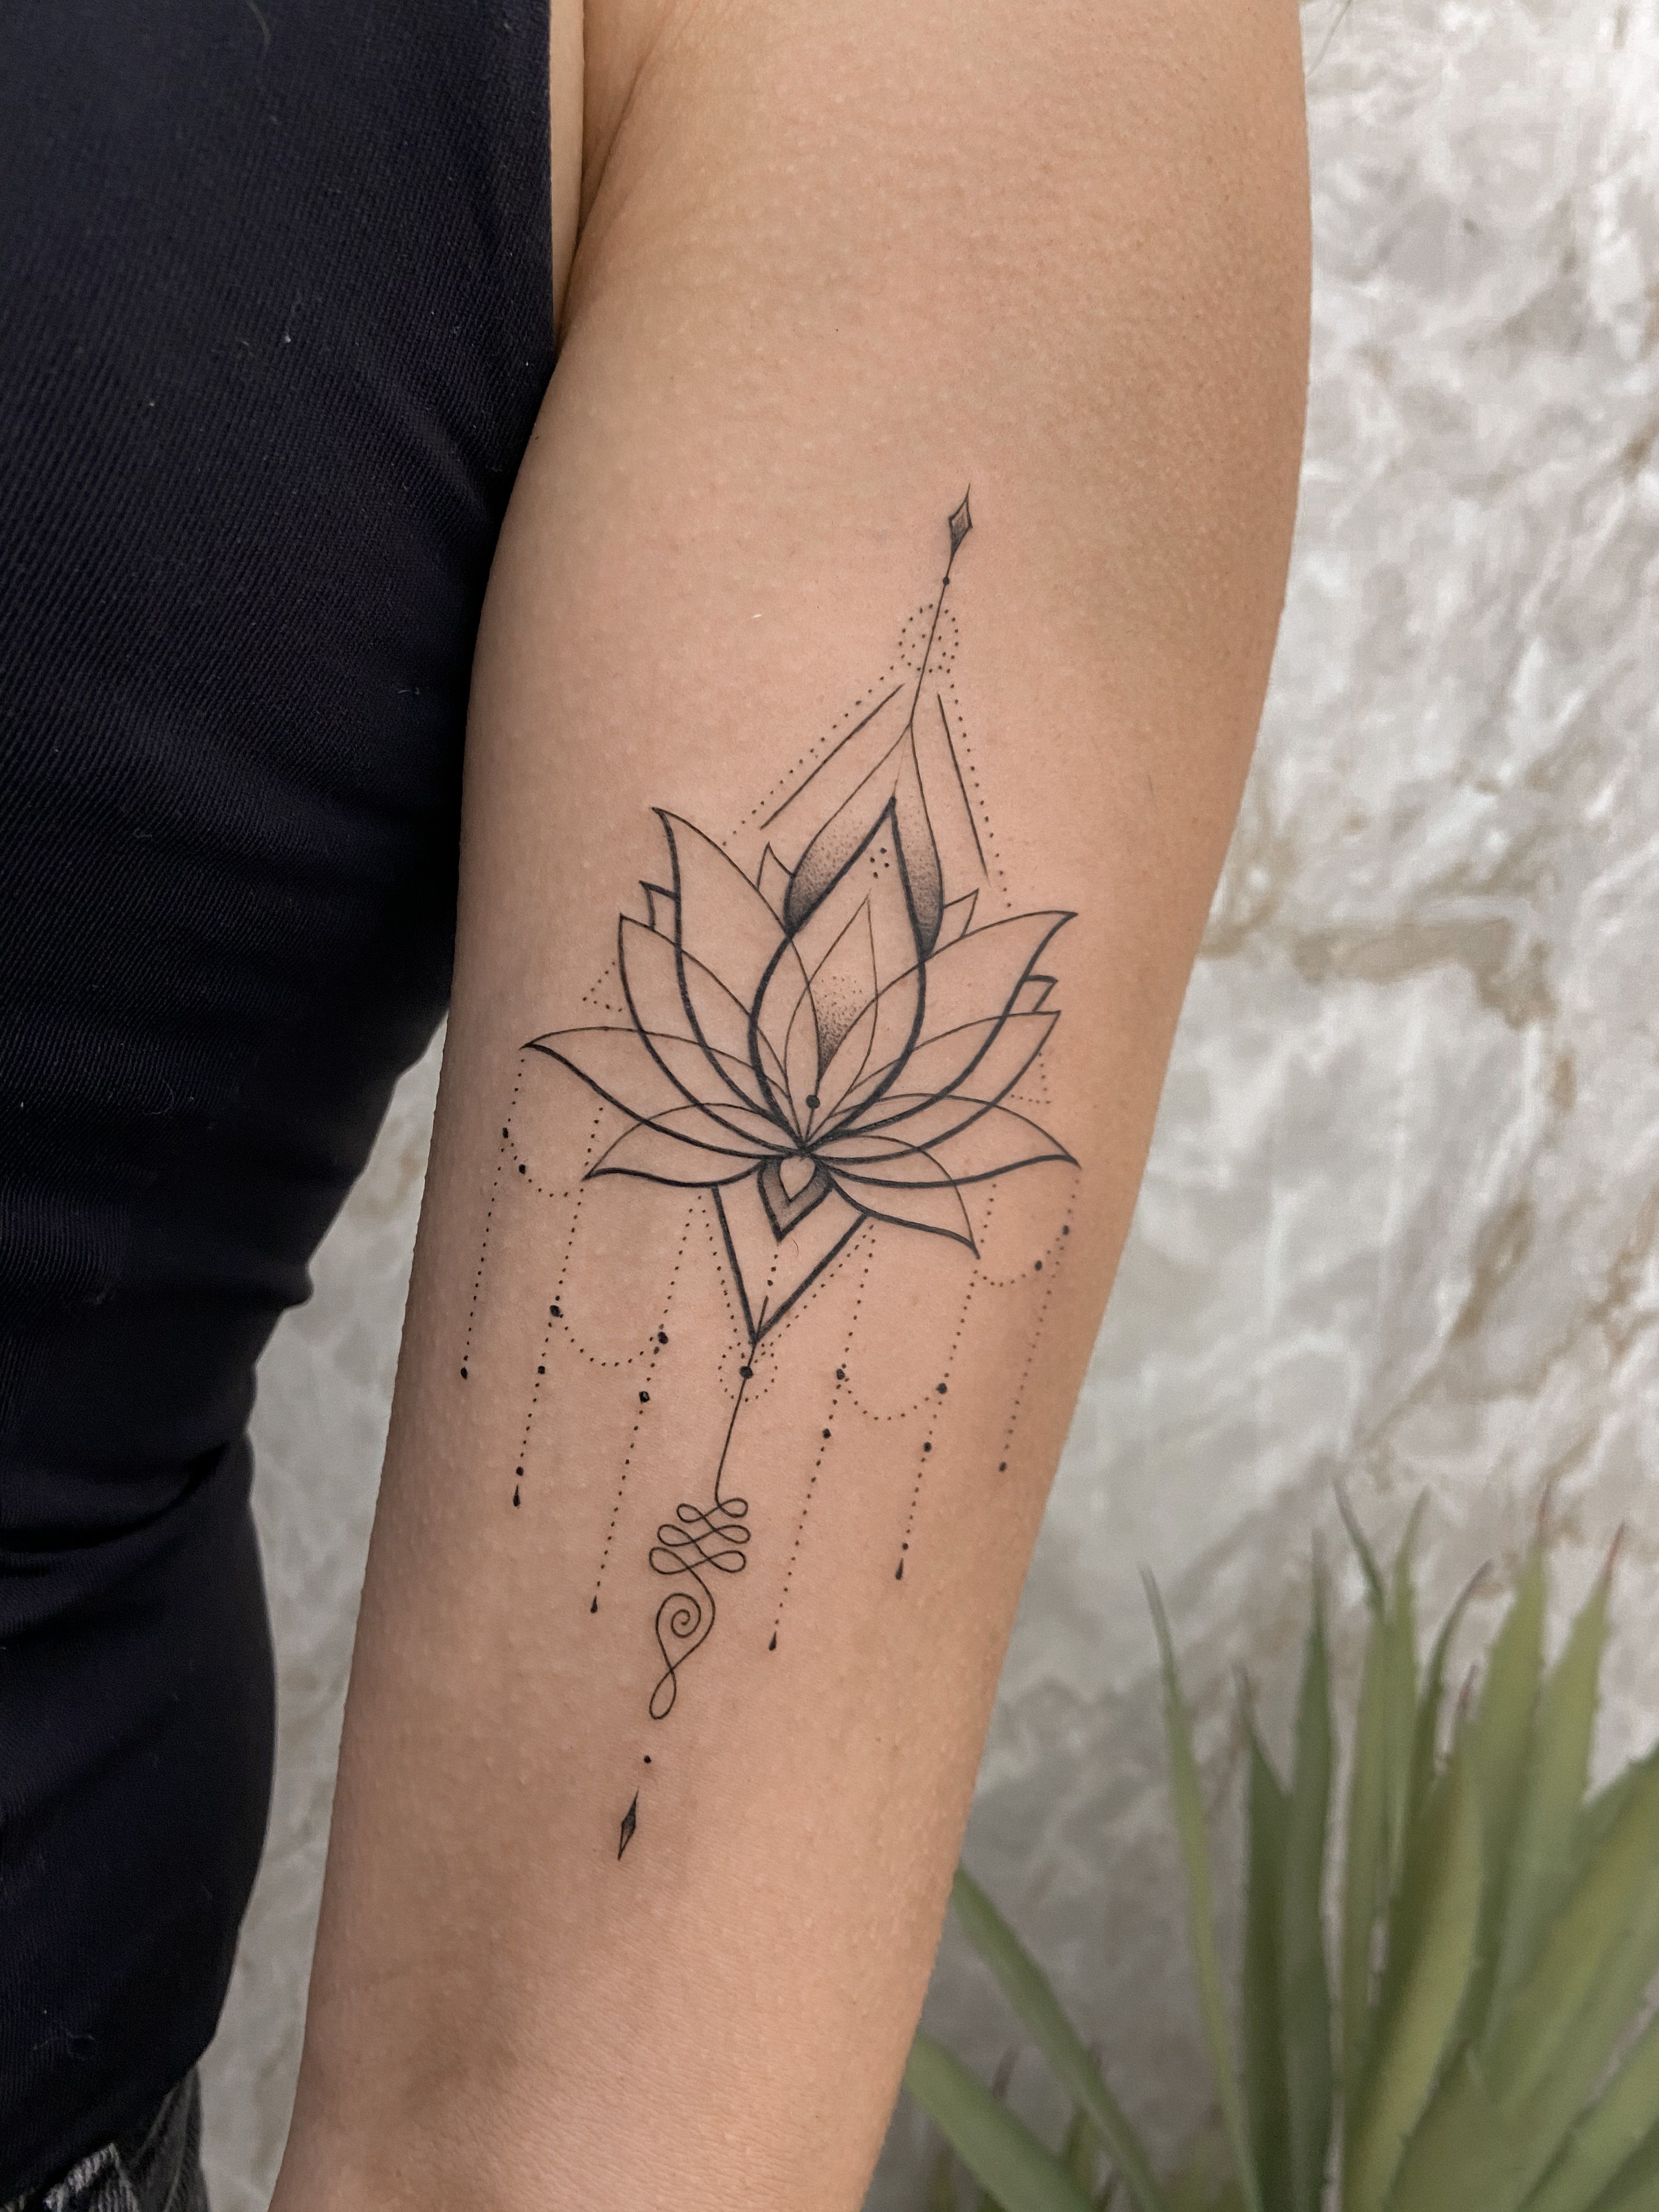 Japanese Lotus Flower with Triangles, Minimalist Tattoo Yoga Style